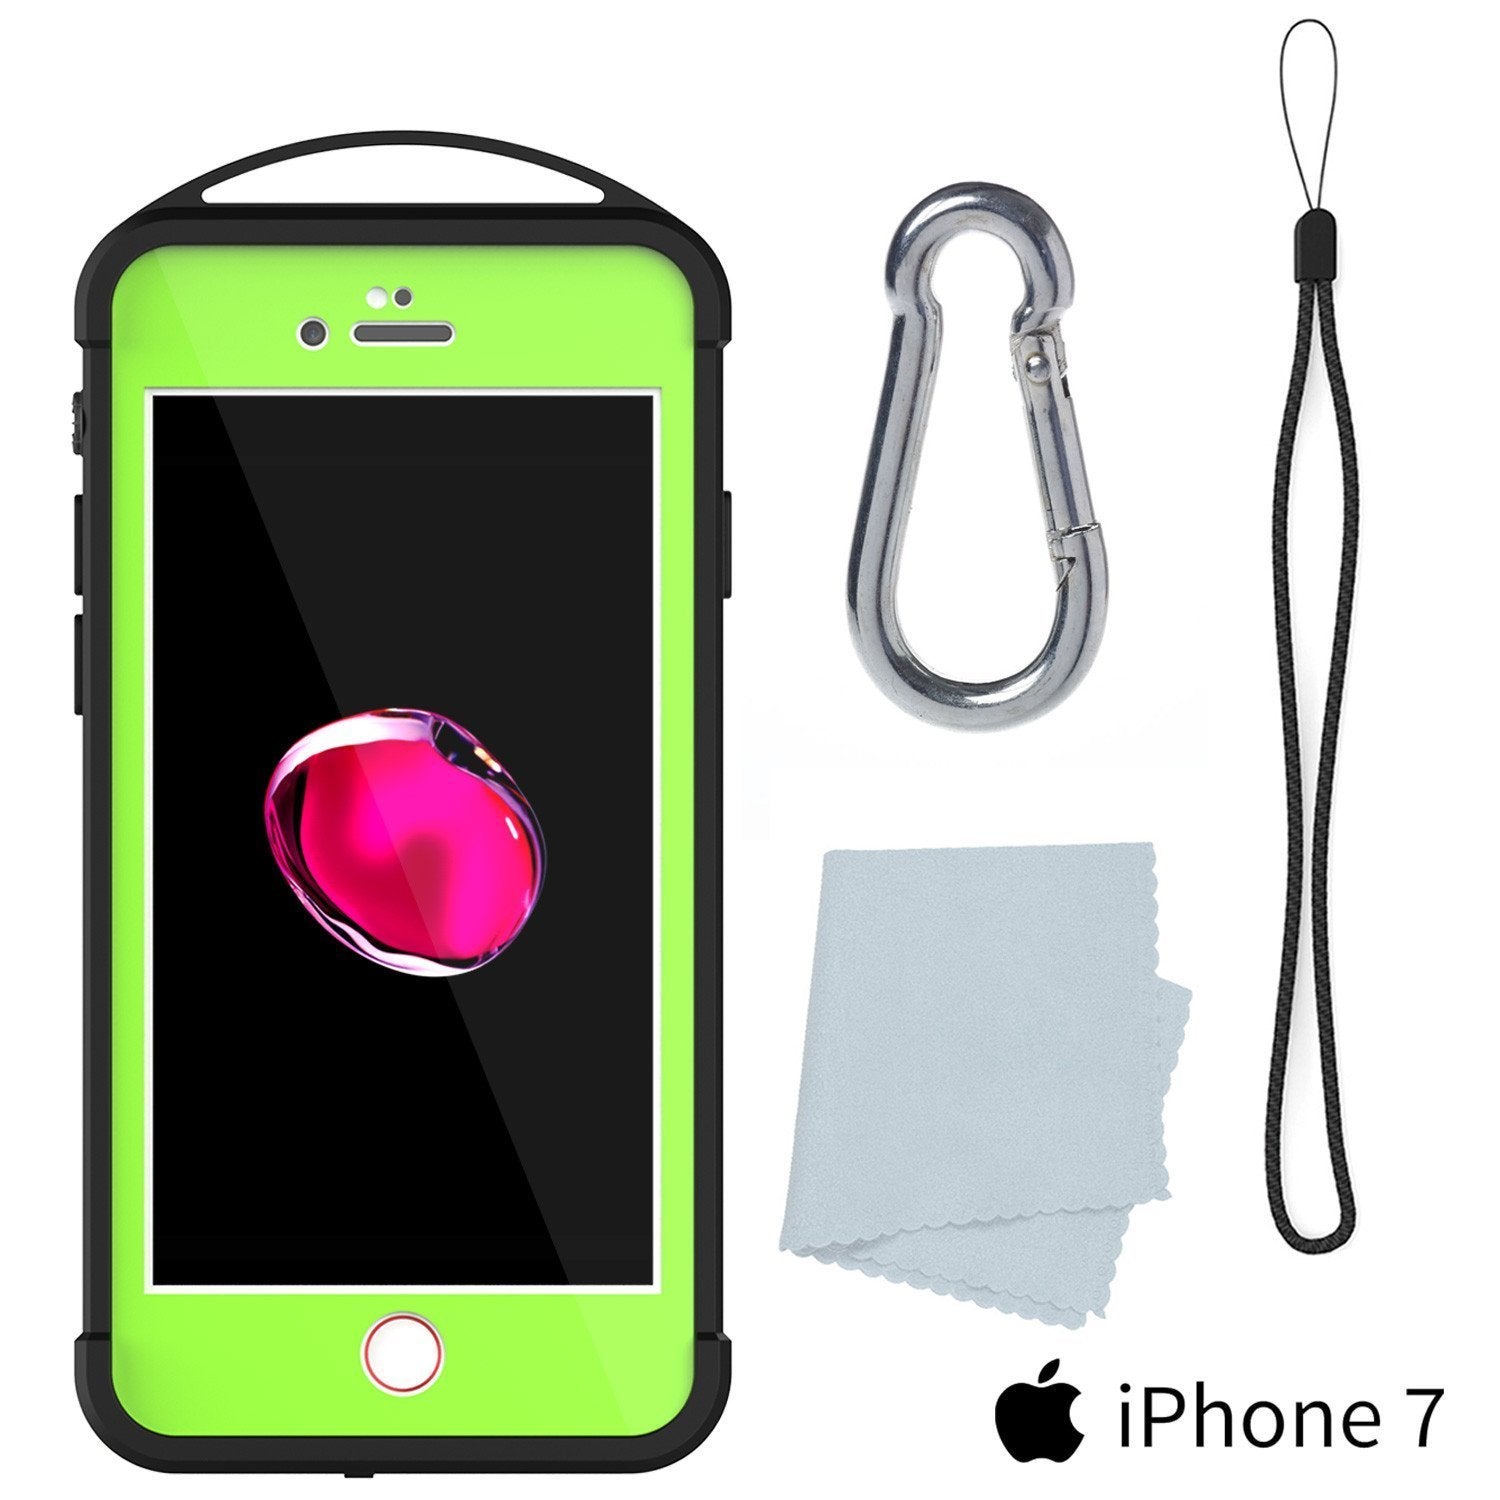 iPhone SE (4.7") Waterproof Case, Punkcase ALPINE Series, Light Green | Heavy Duty Armor Cover